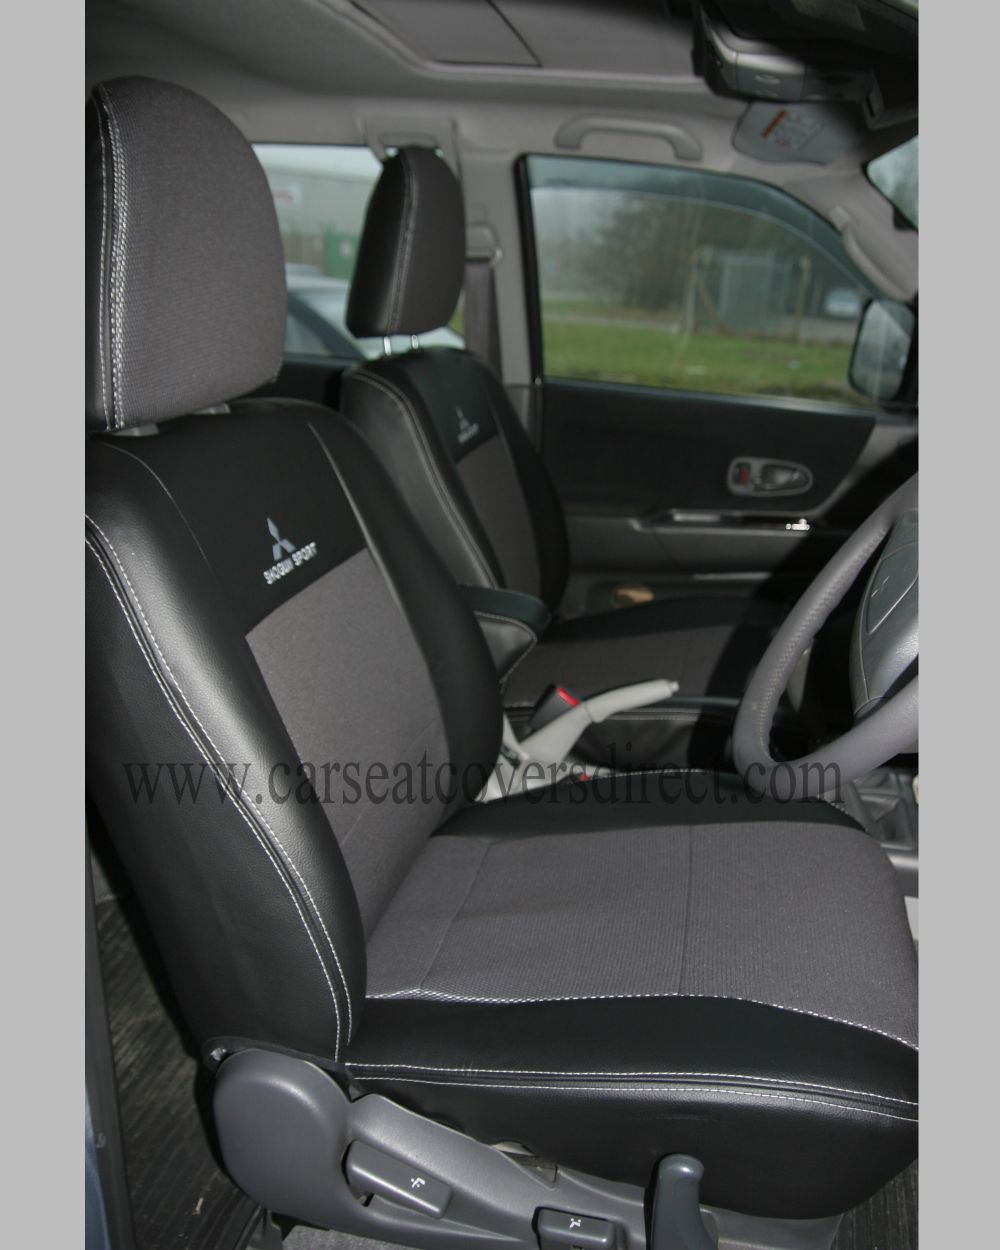 Volkswagen VW Transporter T5 Caravelle Seat Covers